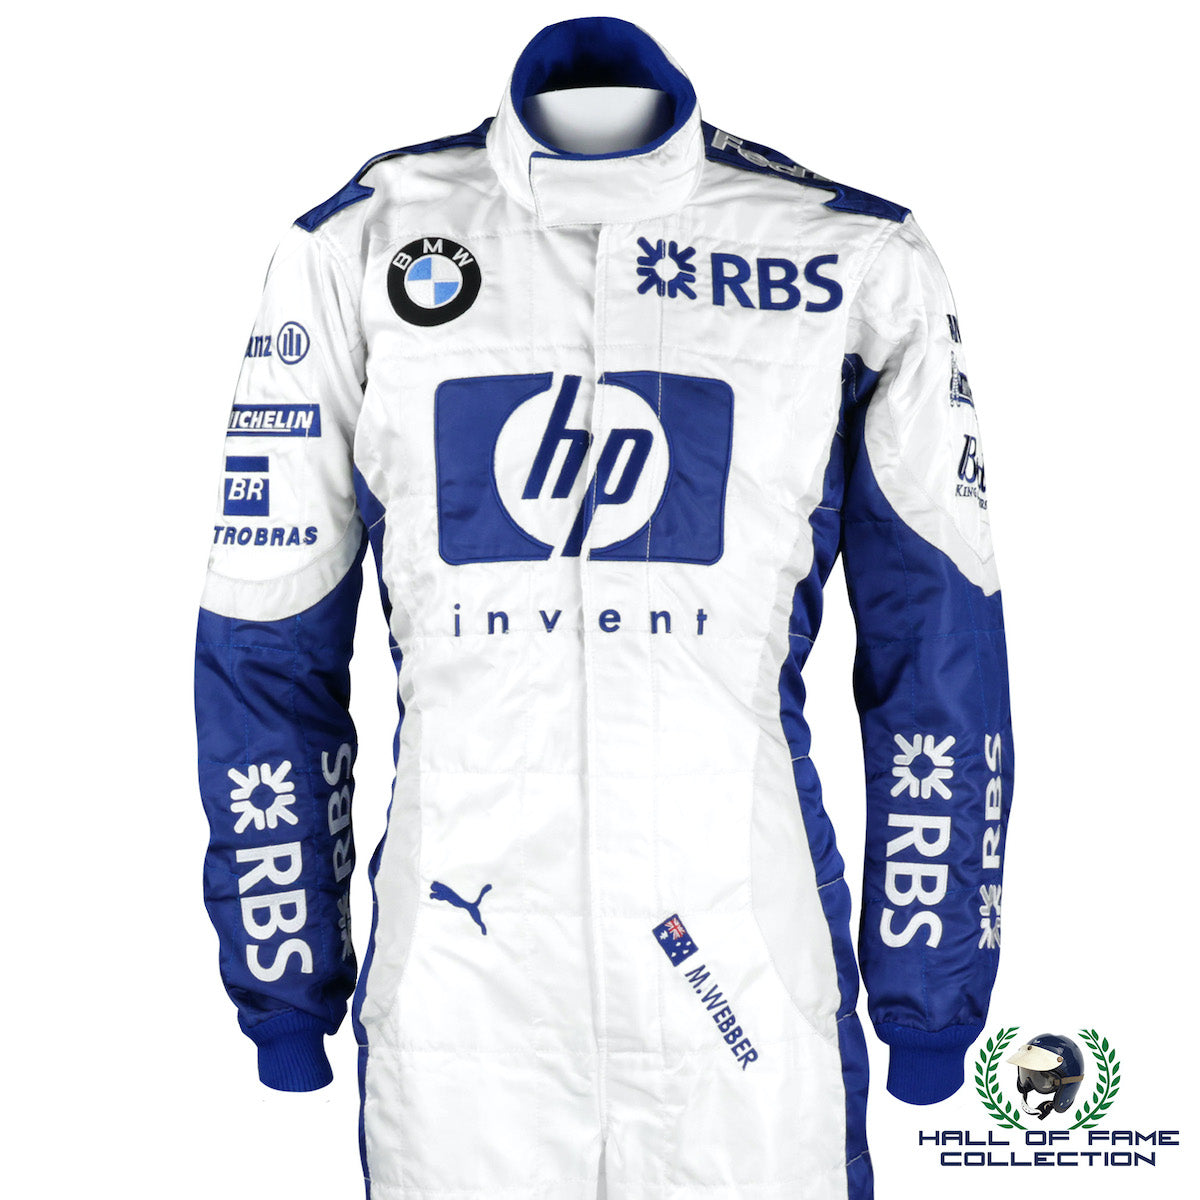 2005 Mark Webber Race Used BMW Williams F1 Suit